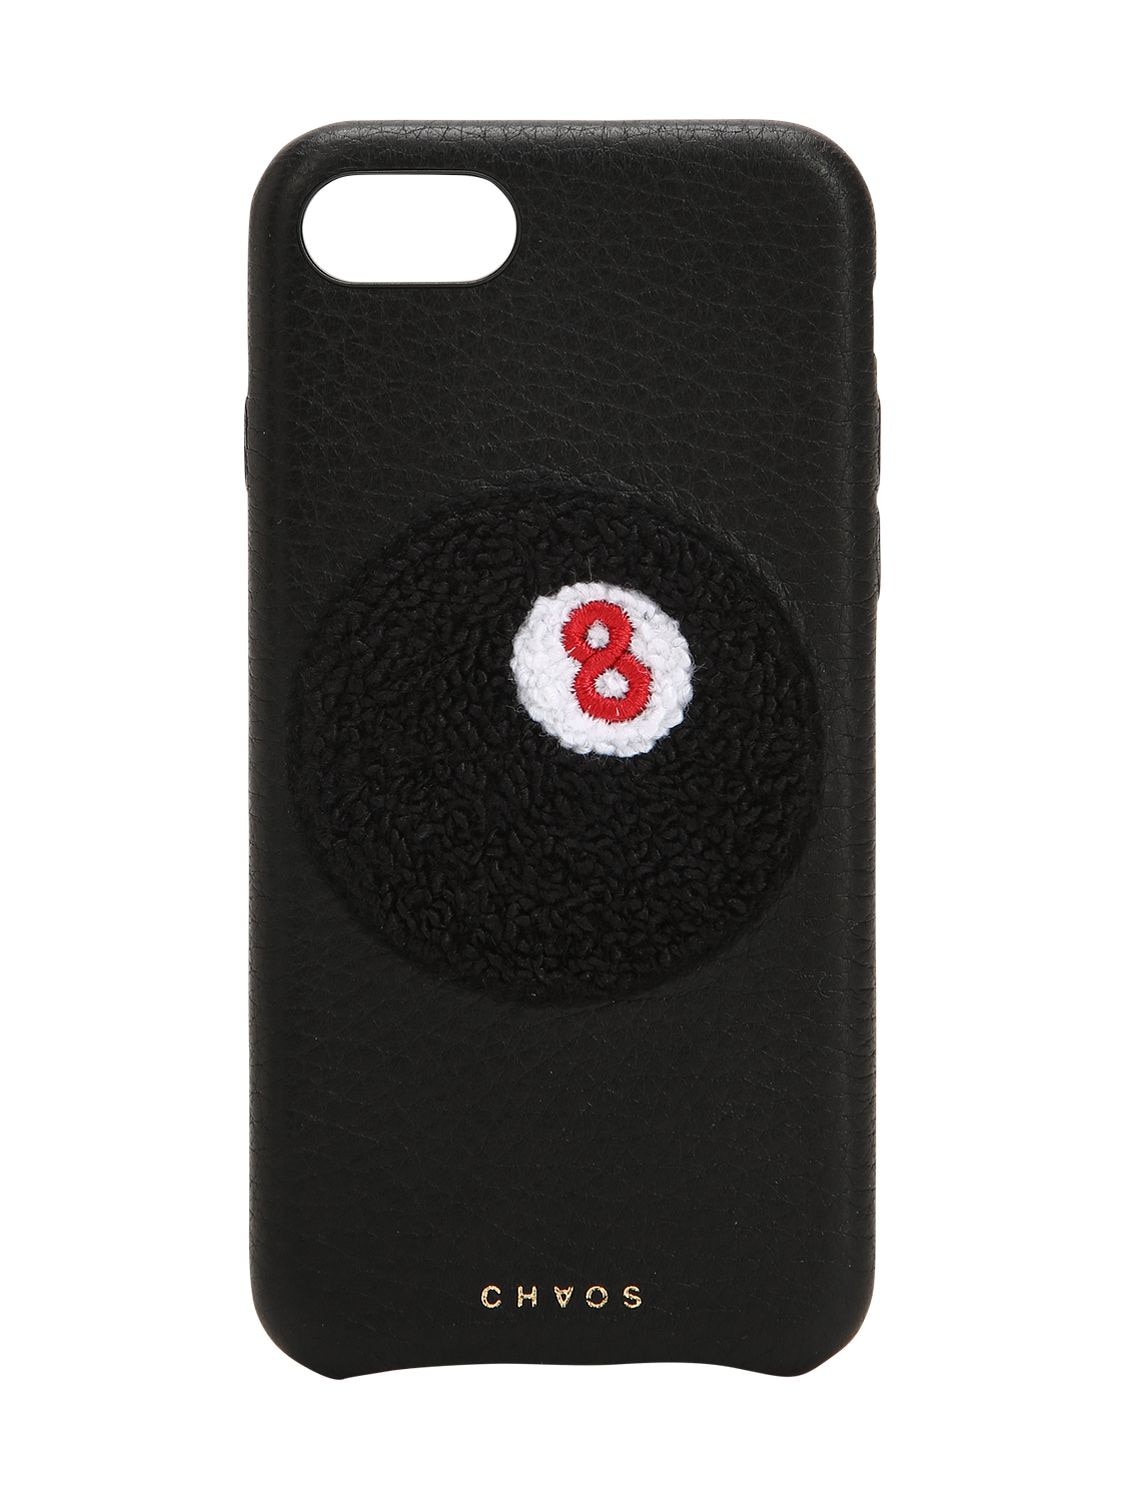 Chaos "8-ball"皮革iphone 7/8 Plus手机壳 In Black